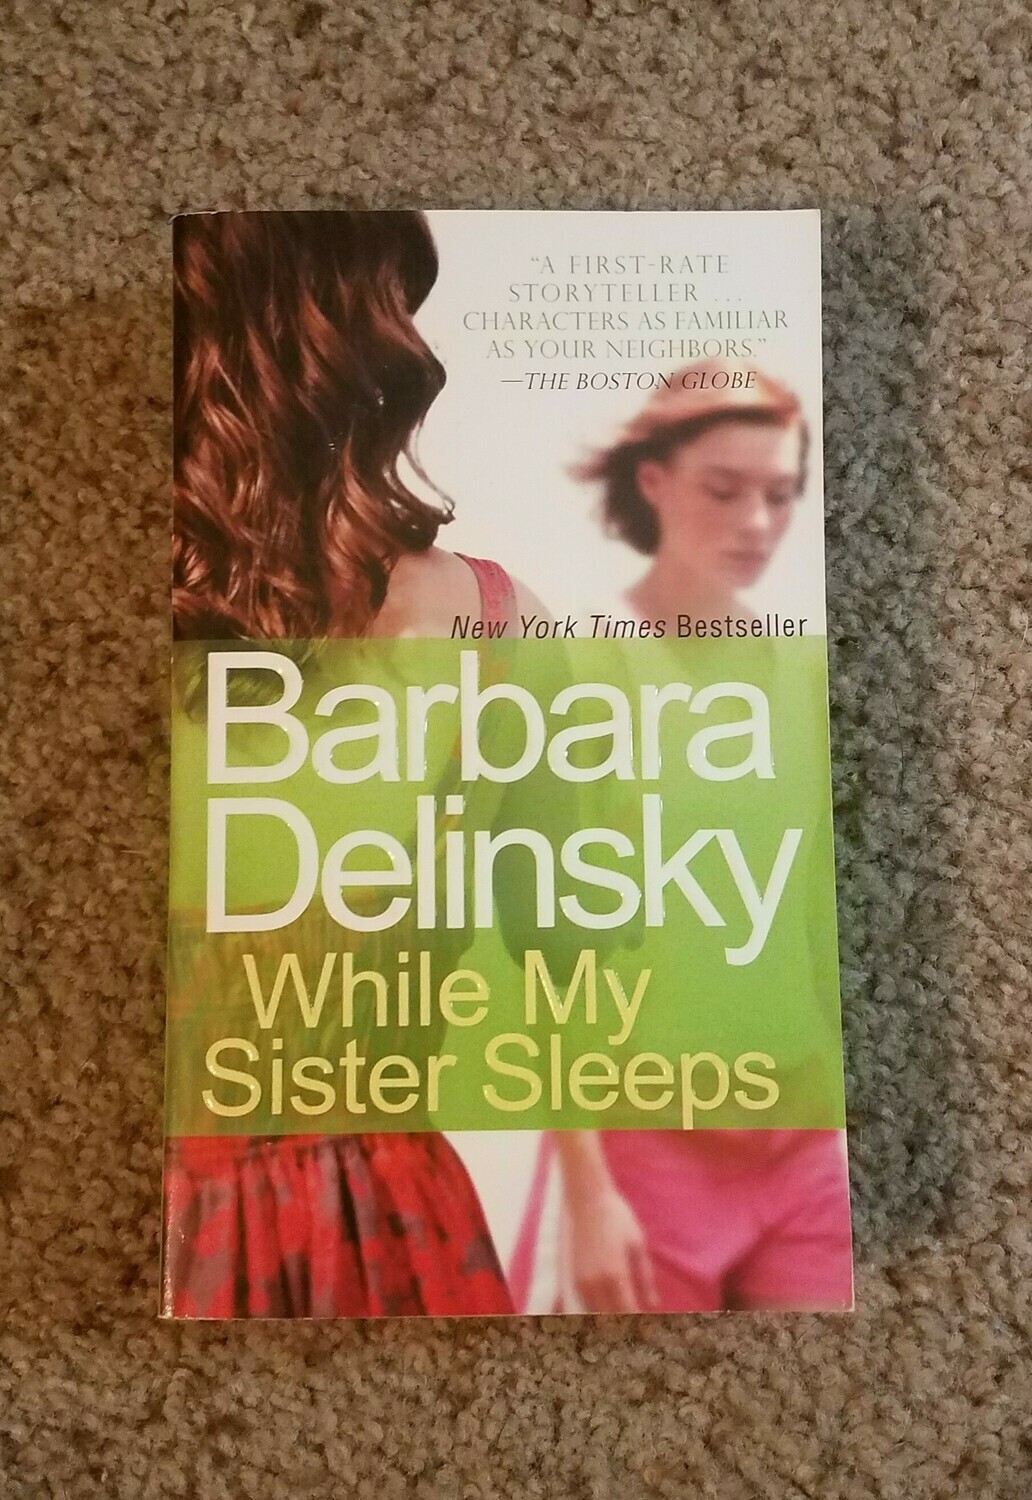 While my Sister Sleeps by Barbara Delinsky